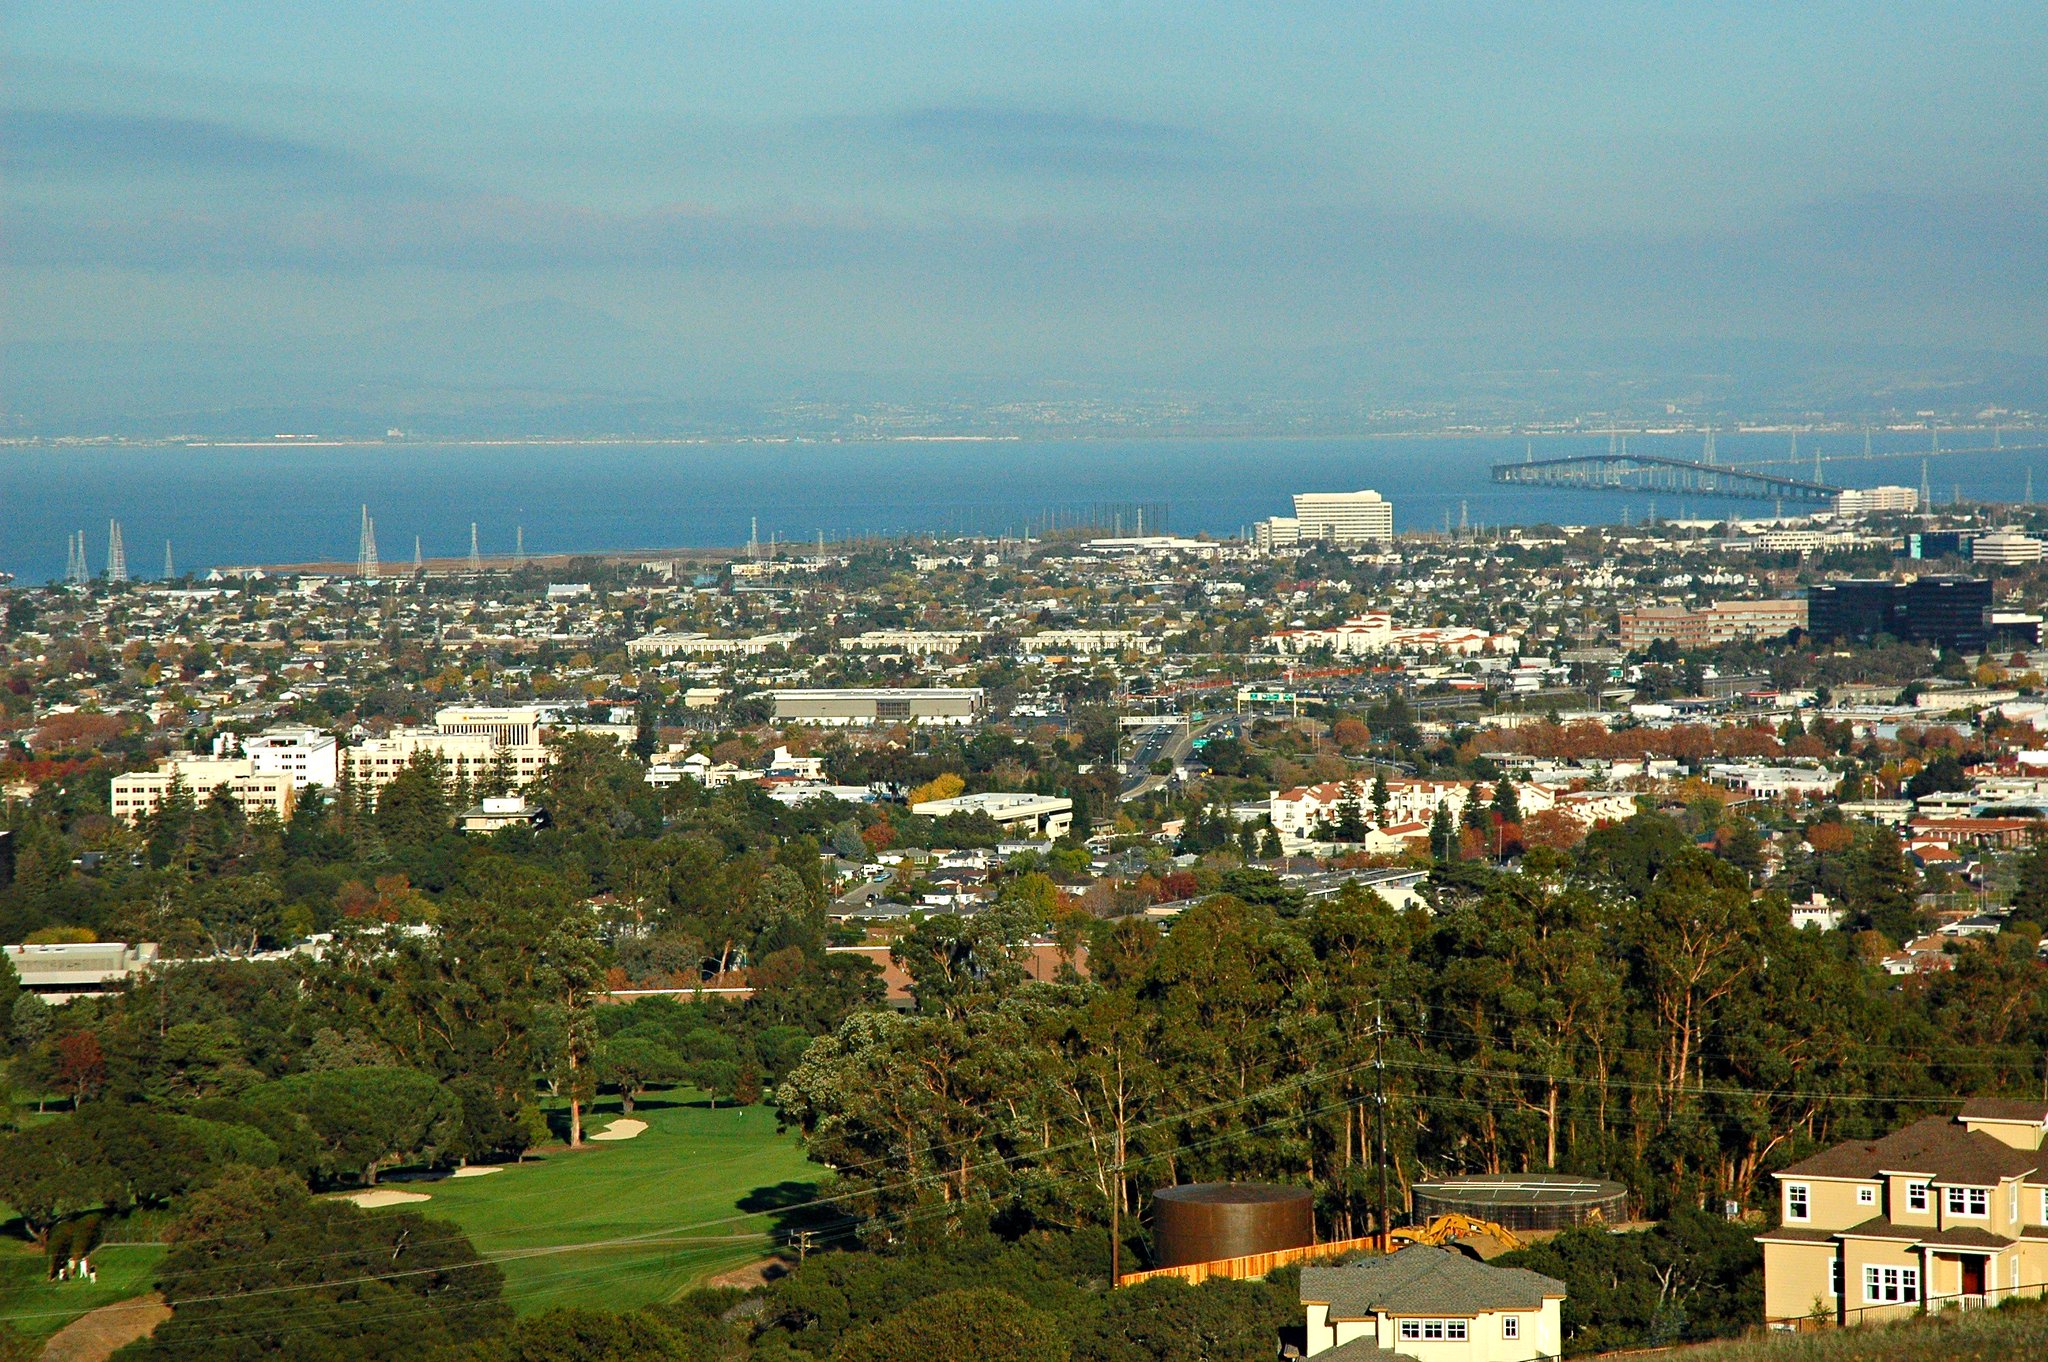 San Mateo, California, looking at the Hayward Bridge; image by Wonderlane, via Flickr.com, public domain.